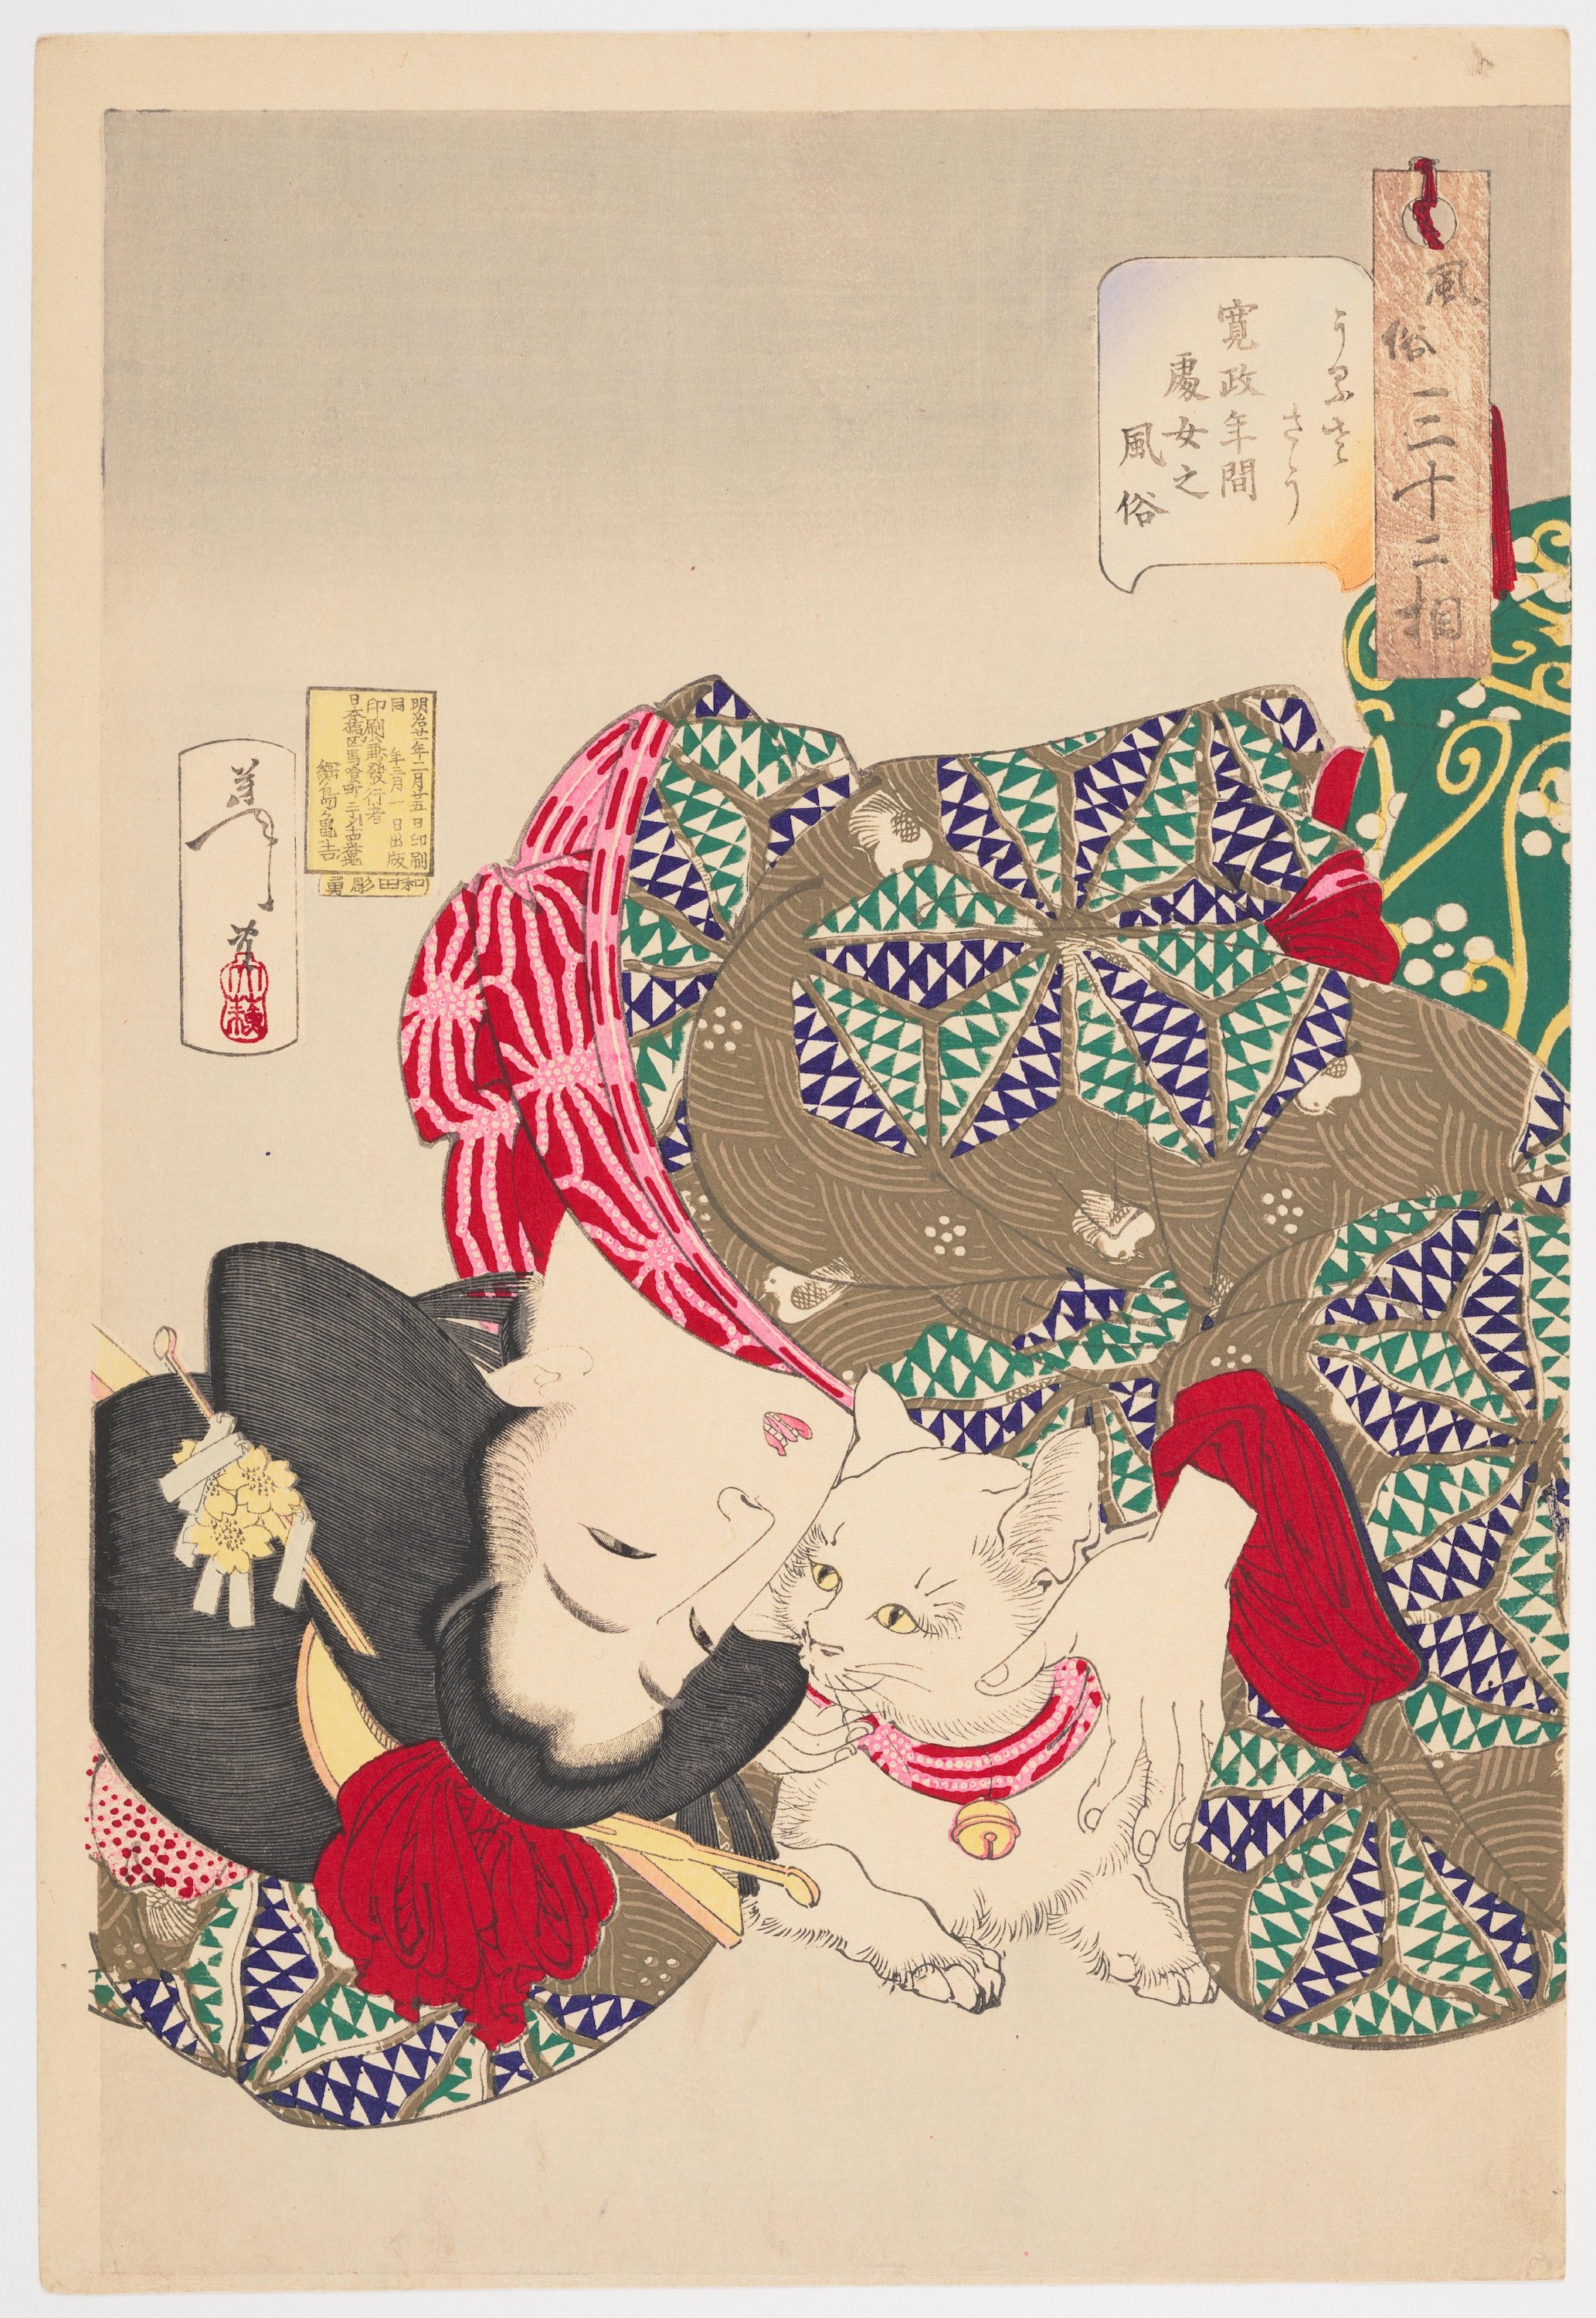 Bruyant : Une jeune femme de la période Kansei avec un chat ronronnant by Tsukioka Yoshitoshi - 1888 - 39.4 × 26.7 cm 